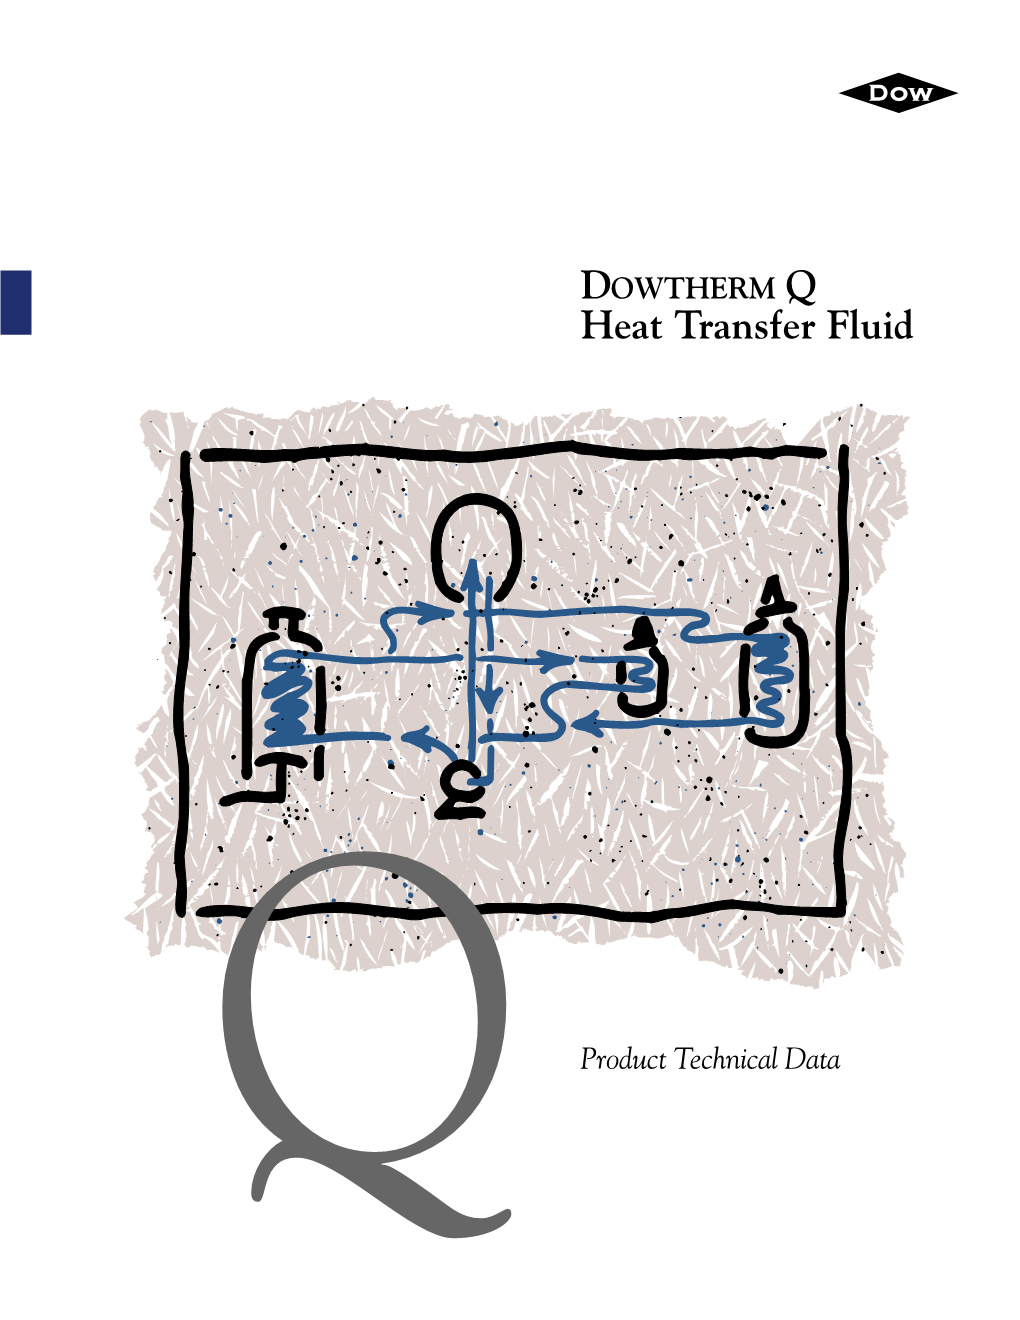 Heat Transfer Fluid Product Technical Data